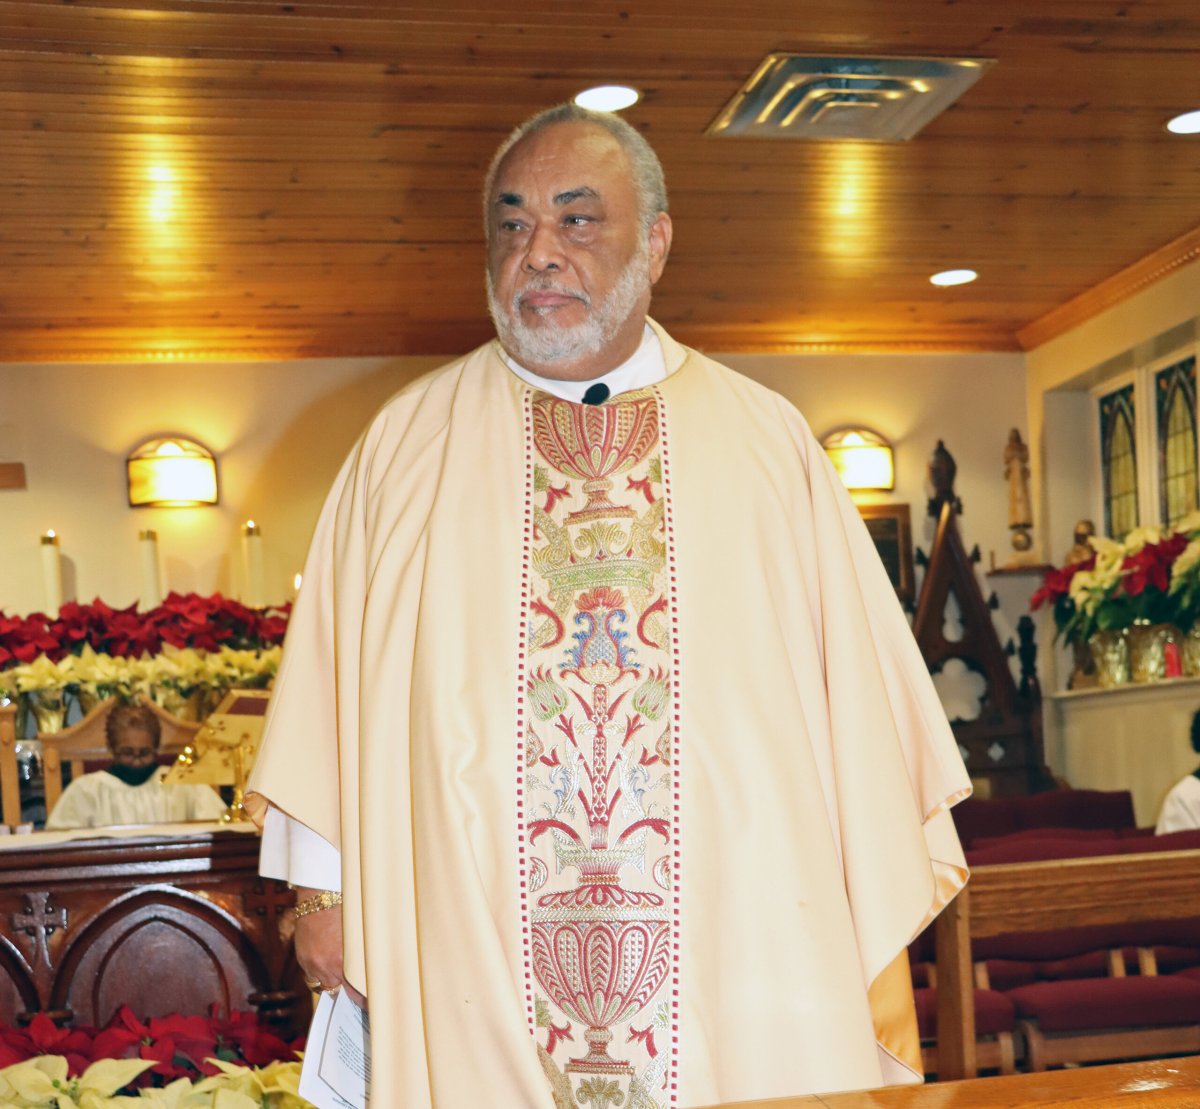 Fr. Rev. Cannon George L. Bonner delivers homily at the funeral service last month for Vincentian-born community worker Joseph Alexander "Alex" Hinds.